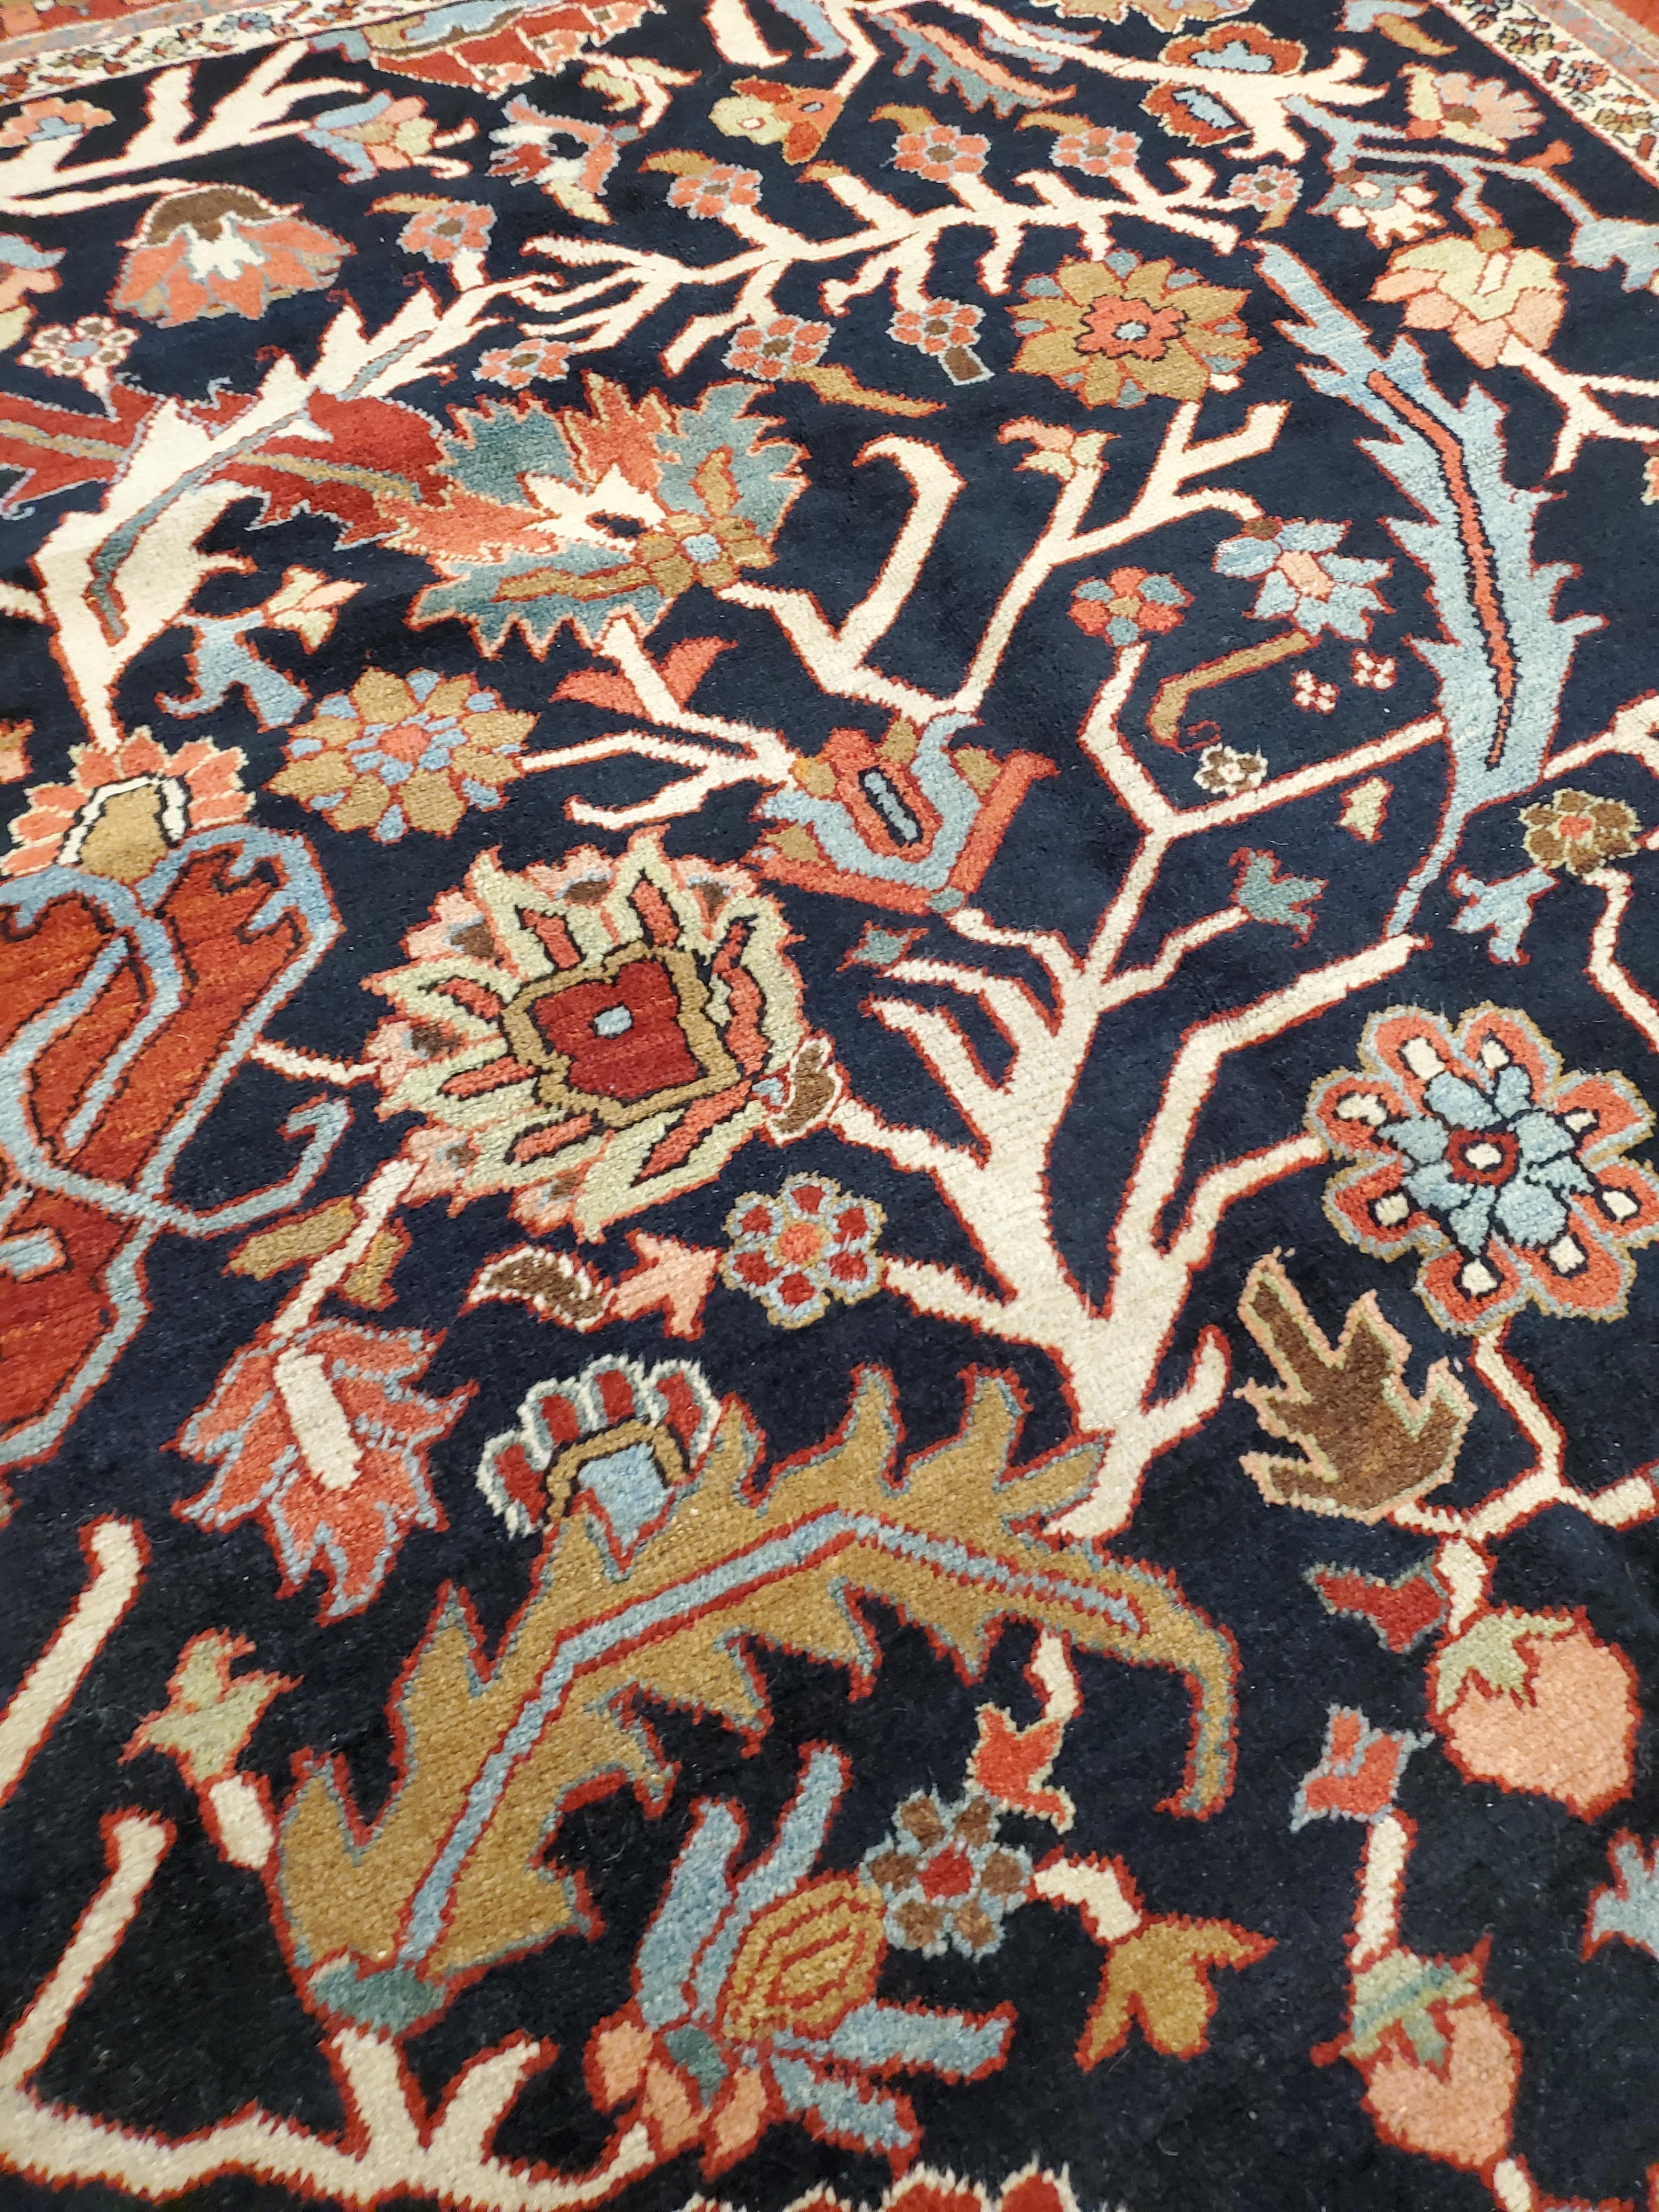 Antique Persian Heriz Carpet Handmade Wool Oriental Rug, Rust, Navy For Sale 2